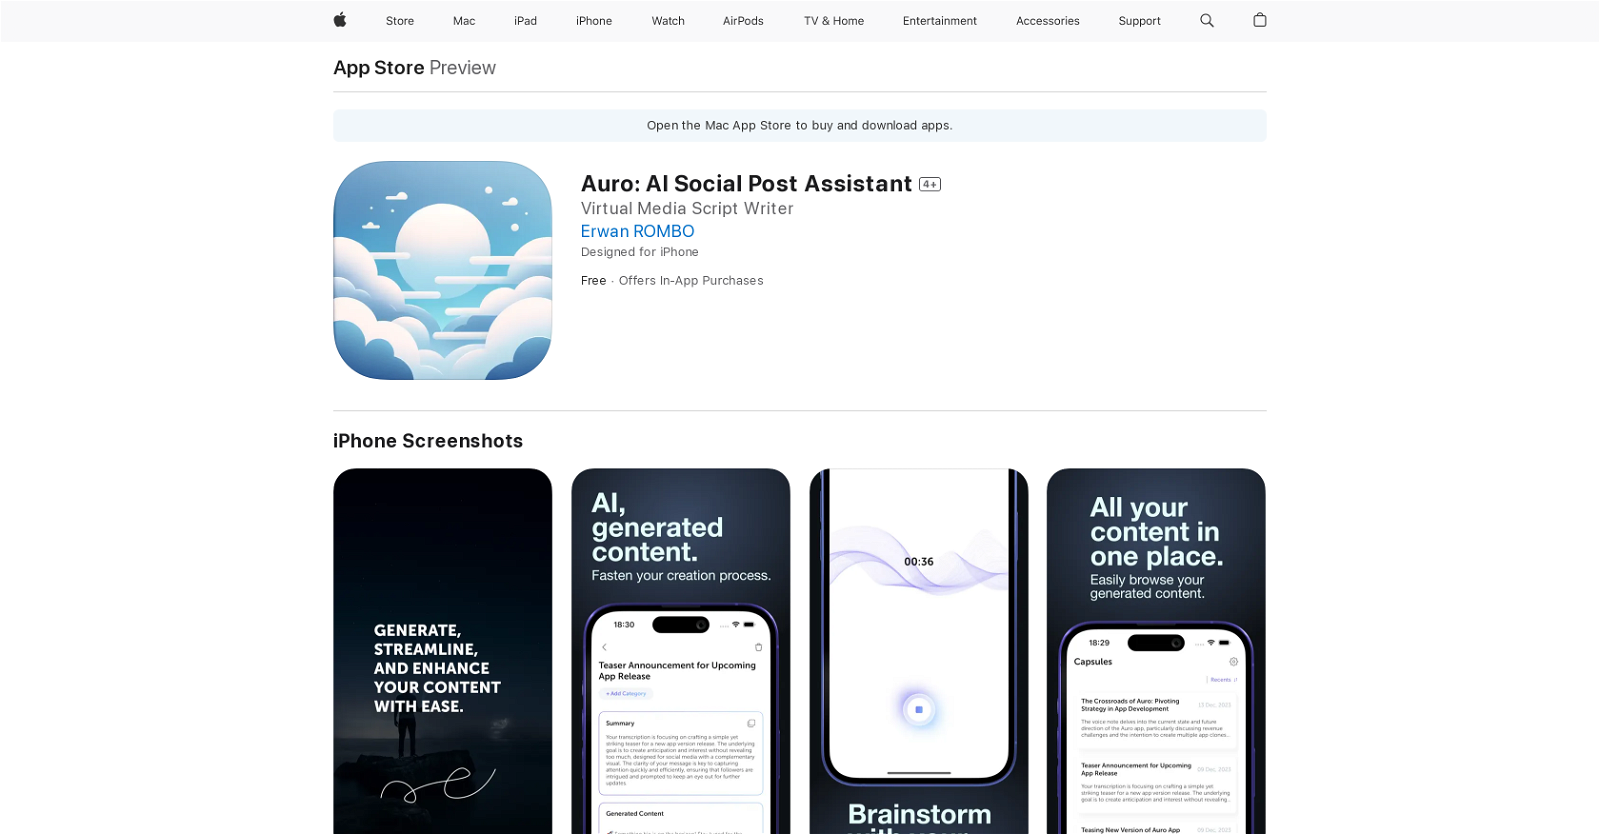 Auro: AI Social Post Assistant website